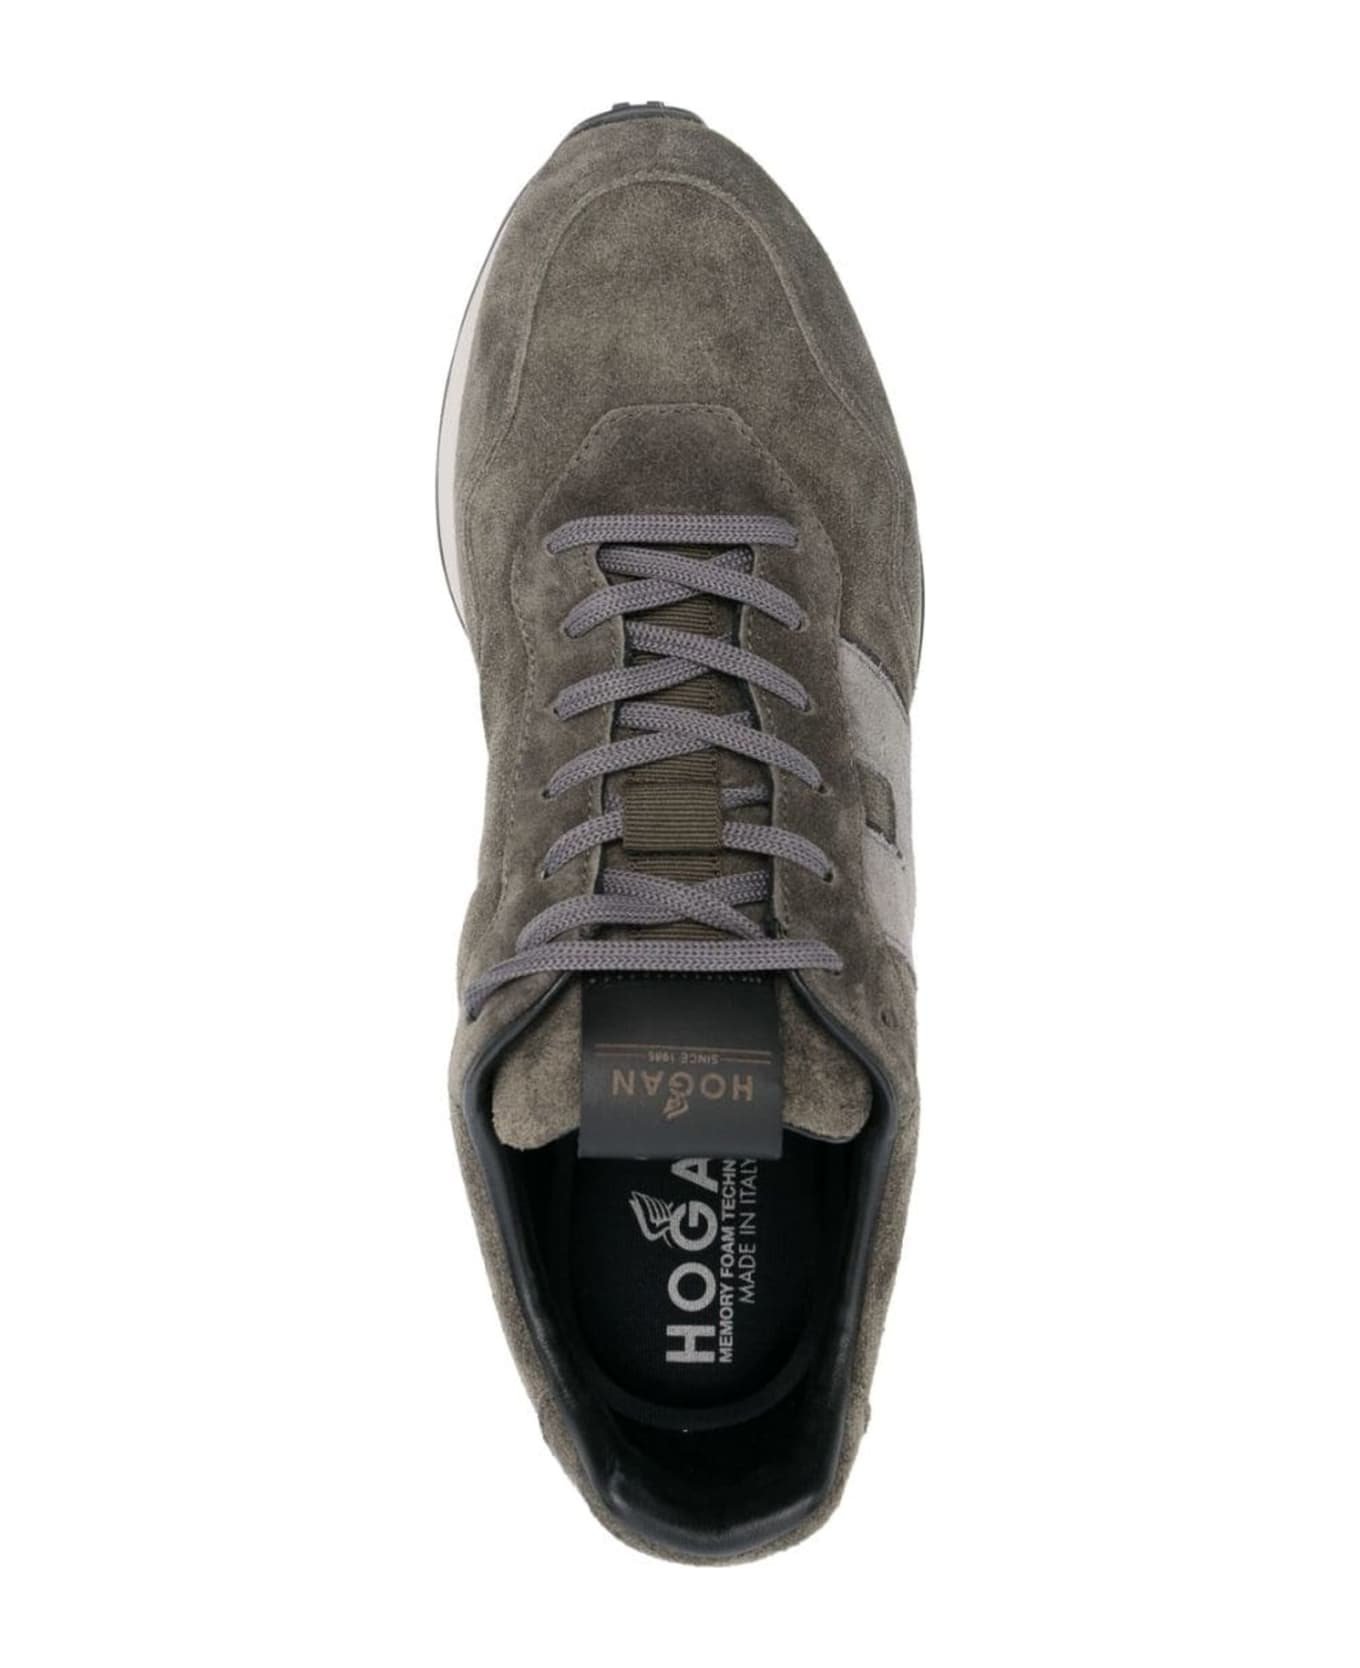 Hogan Green Leather Sneakers - Grey